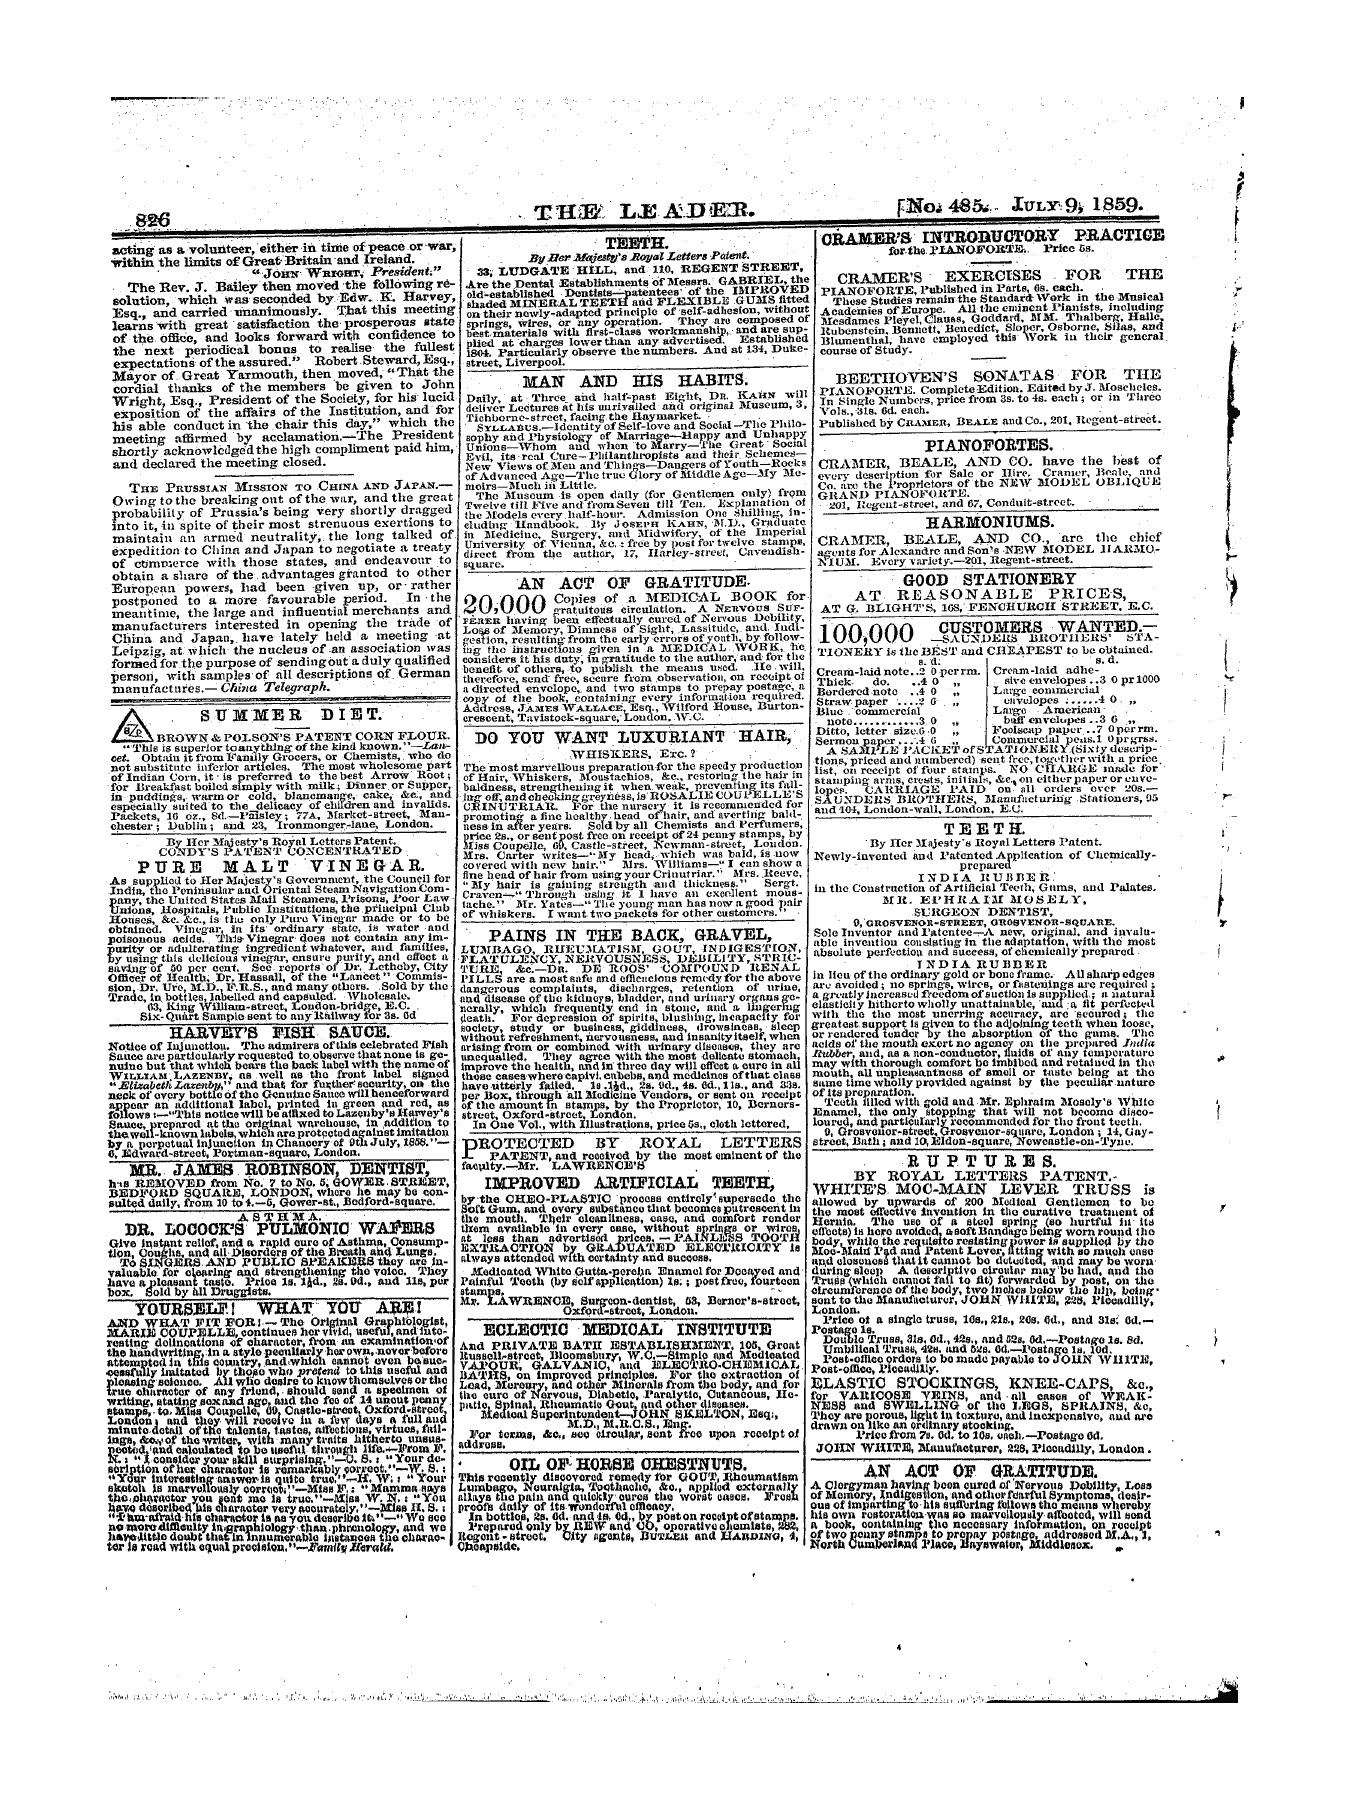 Leader (1850-1860): jS F Y, 1st edition - A Summer Diet. Jlo-Q. Brown & Polson's Patent Corn Flour.